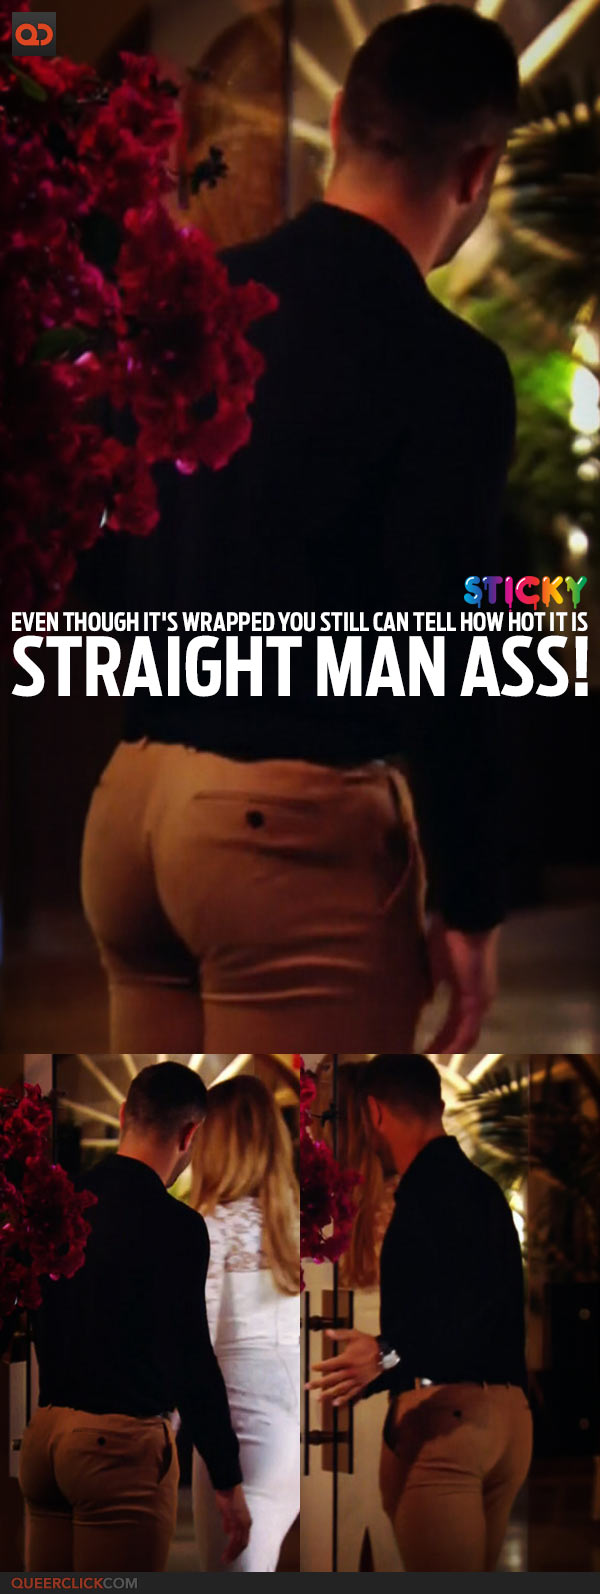 qc-sticky-hottest_straight_mas_ass-teaser